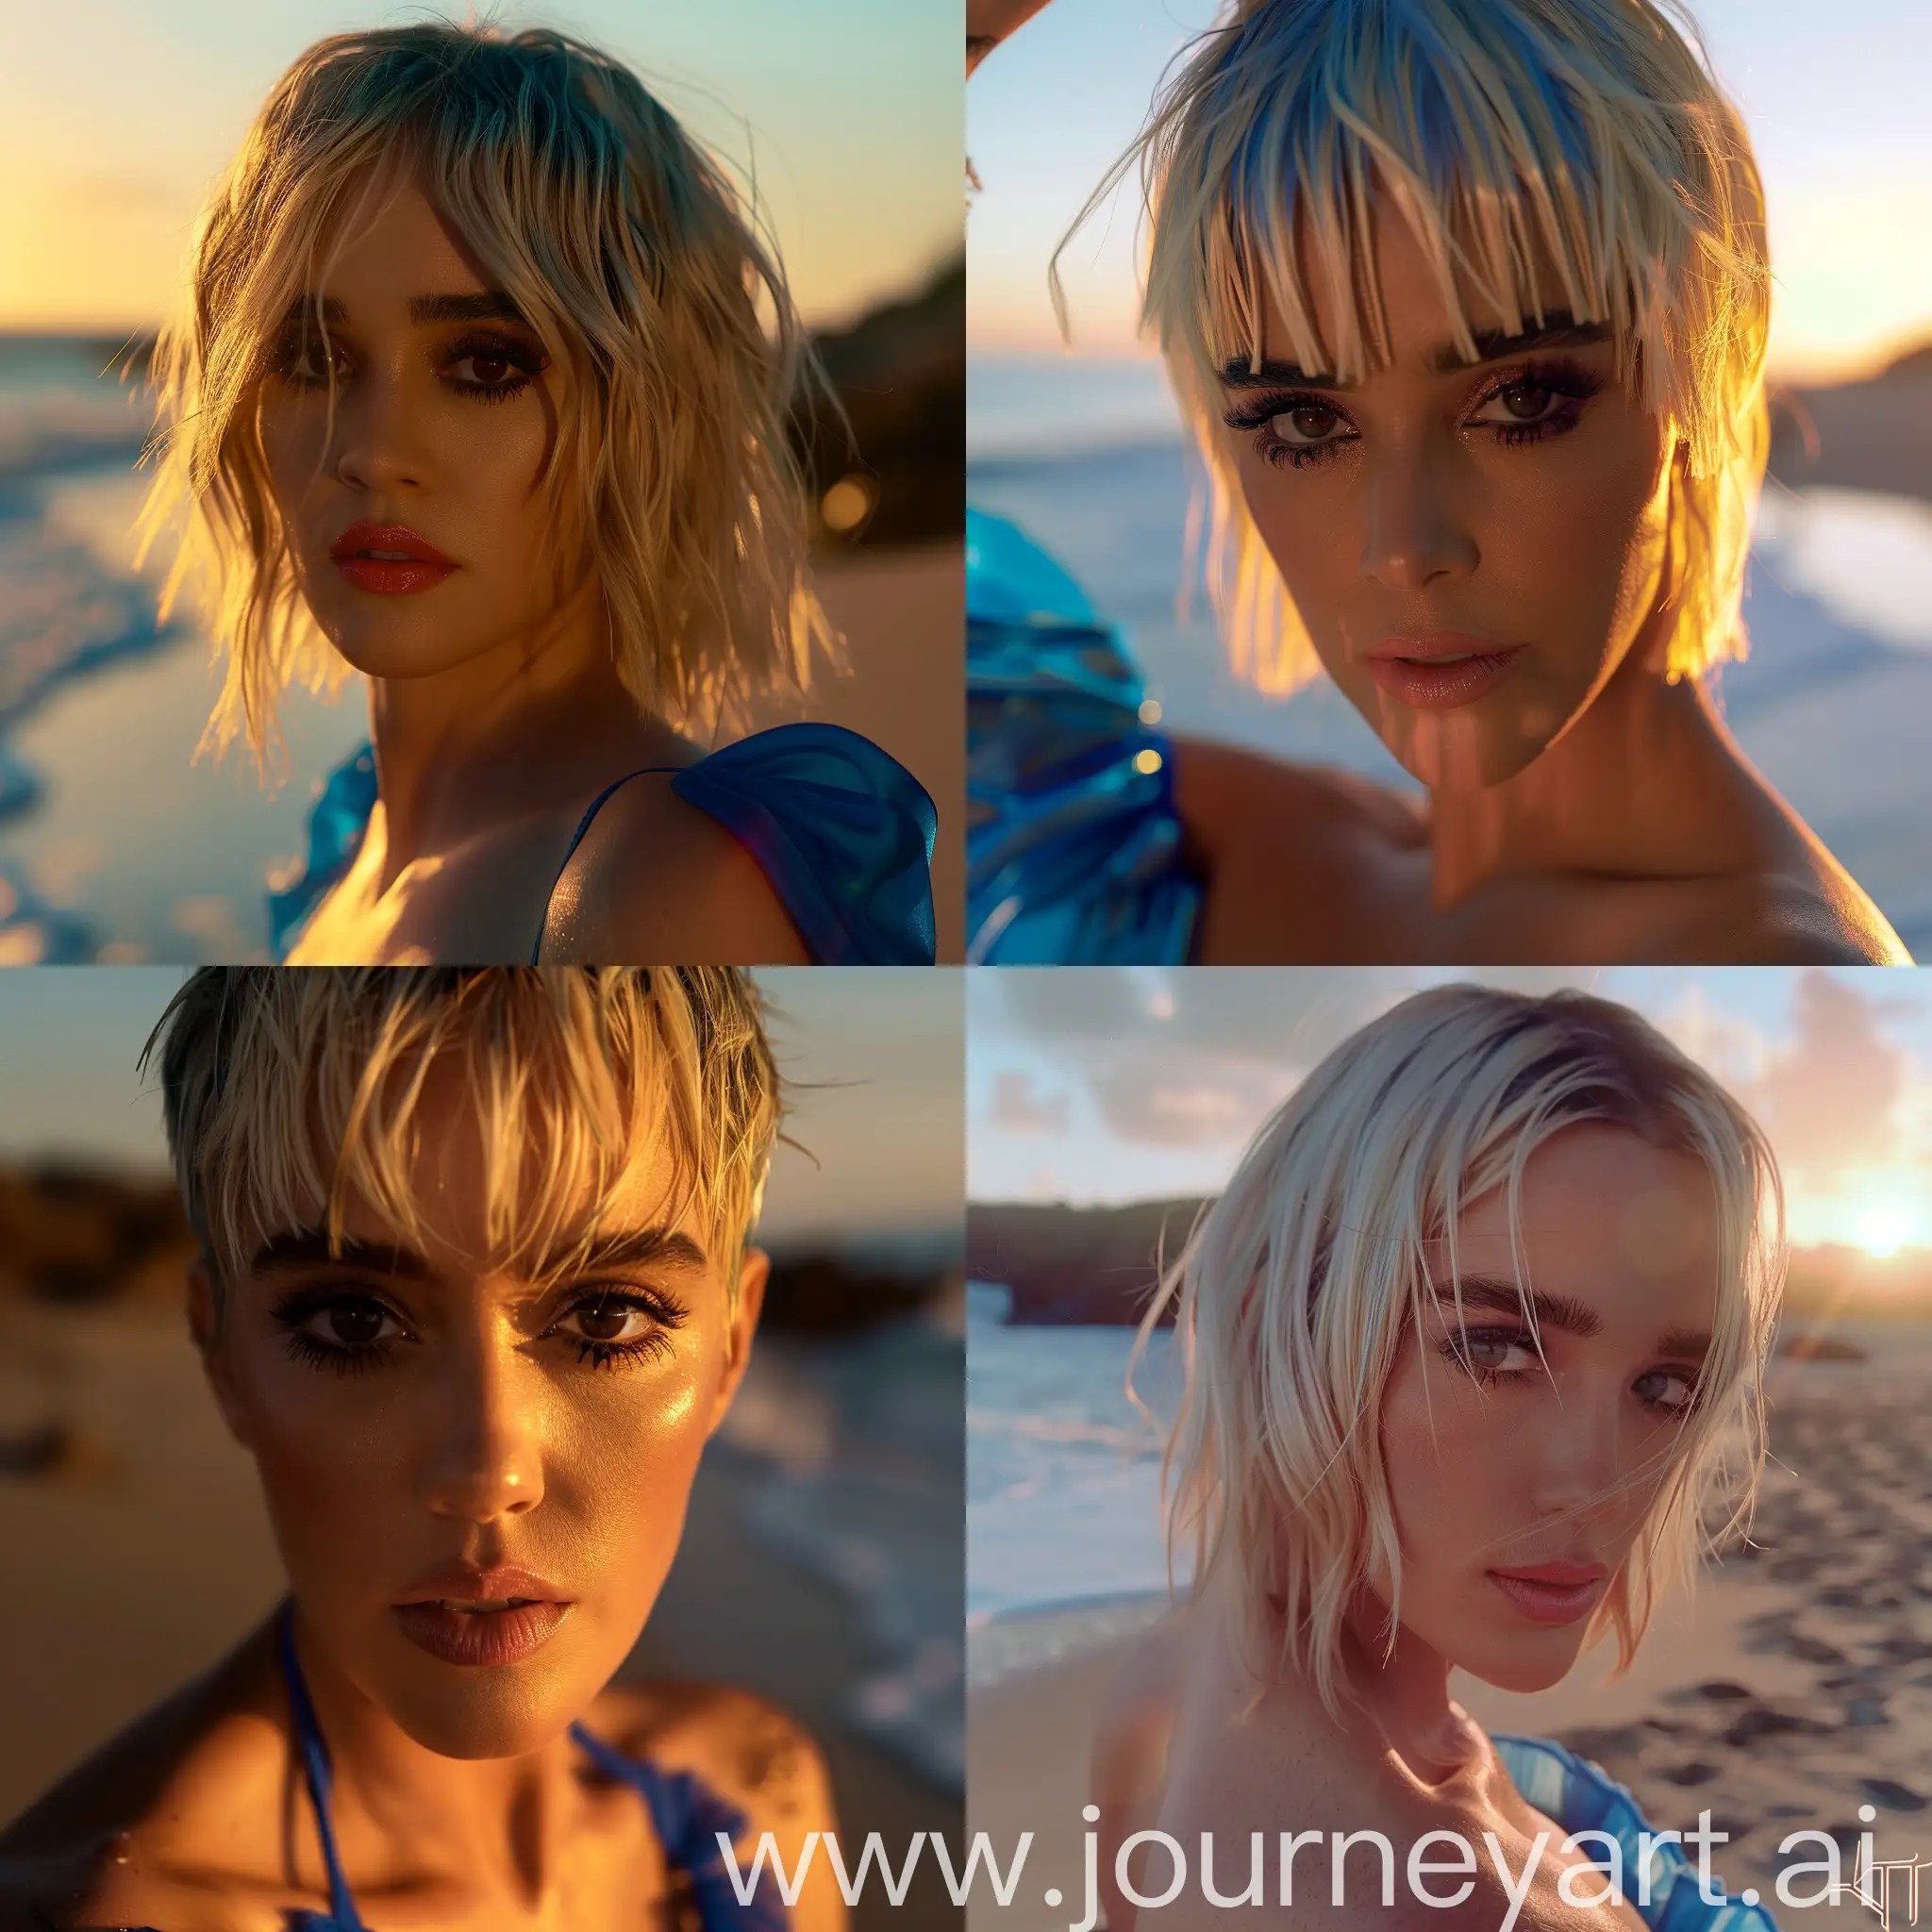 Katy Perry looking into the camera, dark eyes, highlighted blonde hair, wearing a blue dress, Beach, sunrise, cinematic lighting, aperture 1.8, 35mm lens, red cinema 6k komodo camera